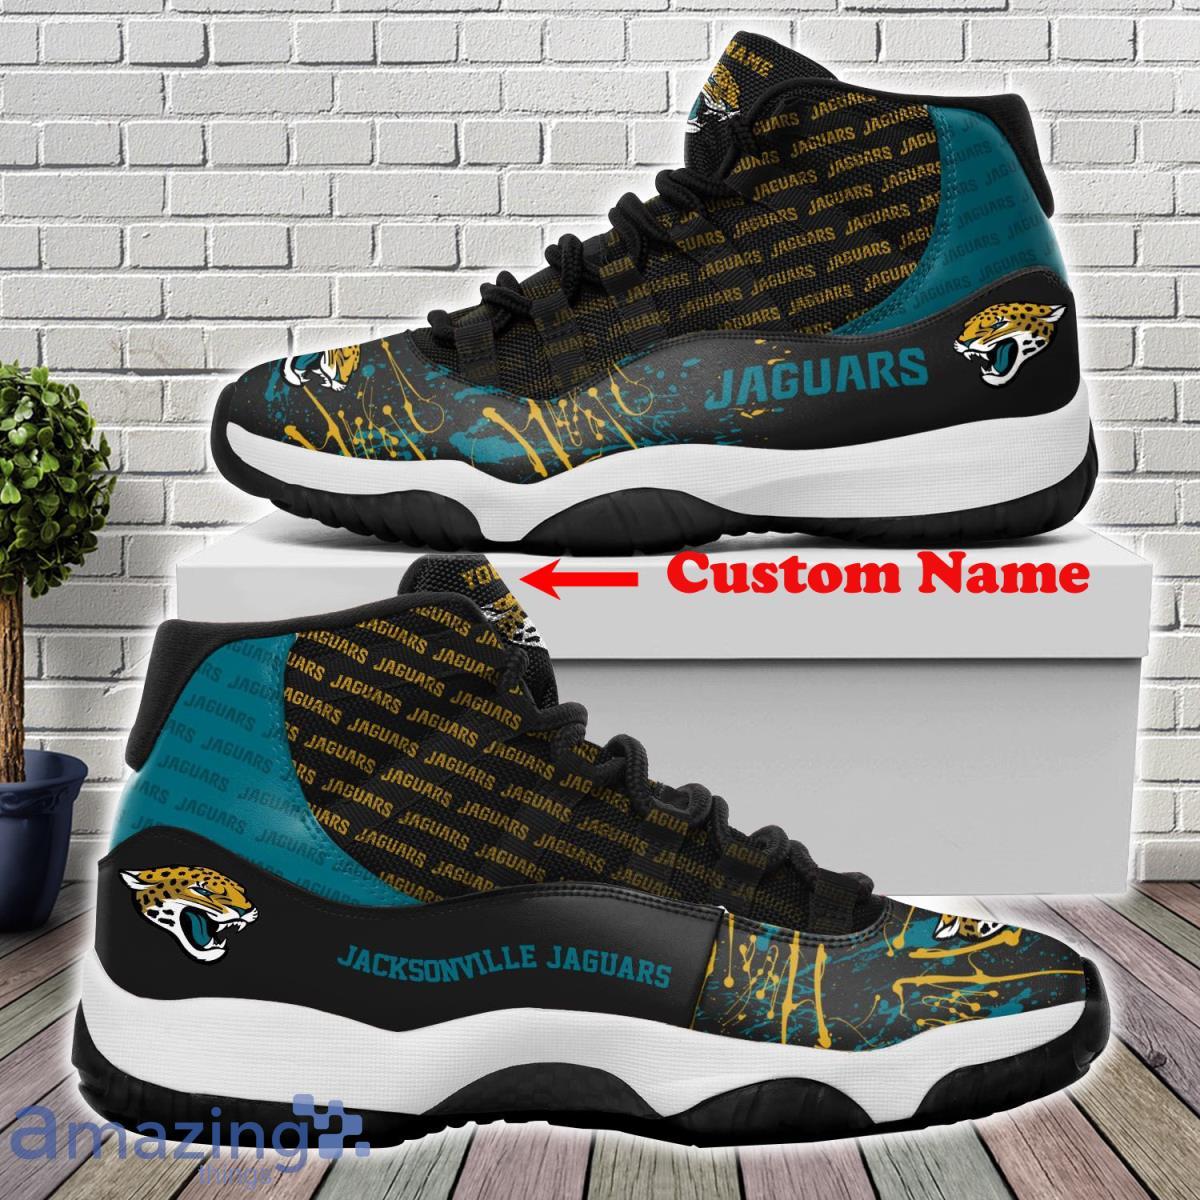 Jacksonville Jaguars Football Team Air Jordan 11 Custom Name Sneakers For Fans Product Photo 1